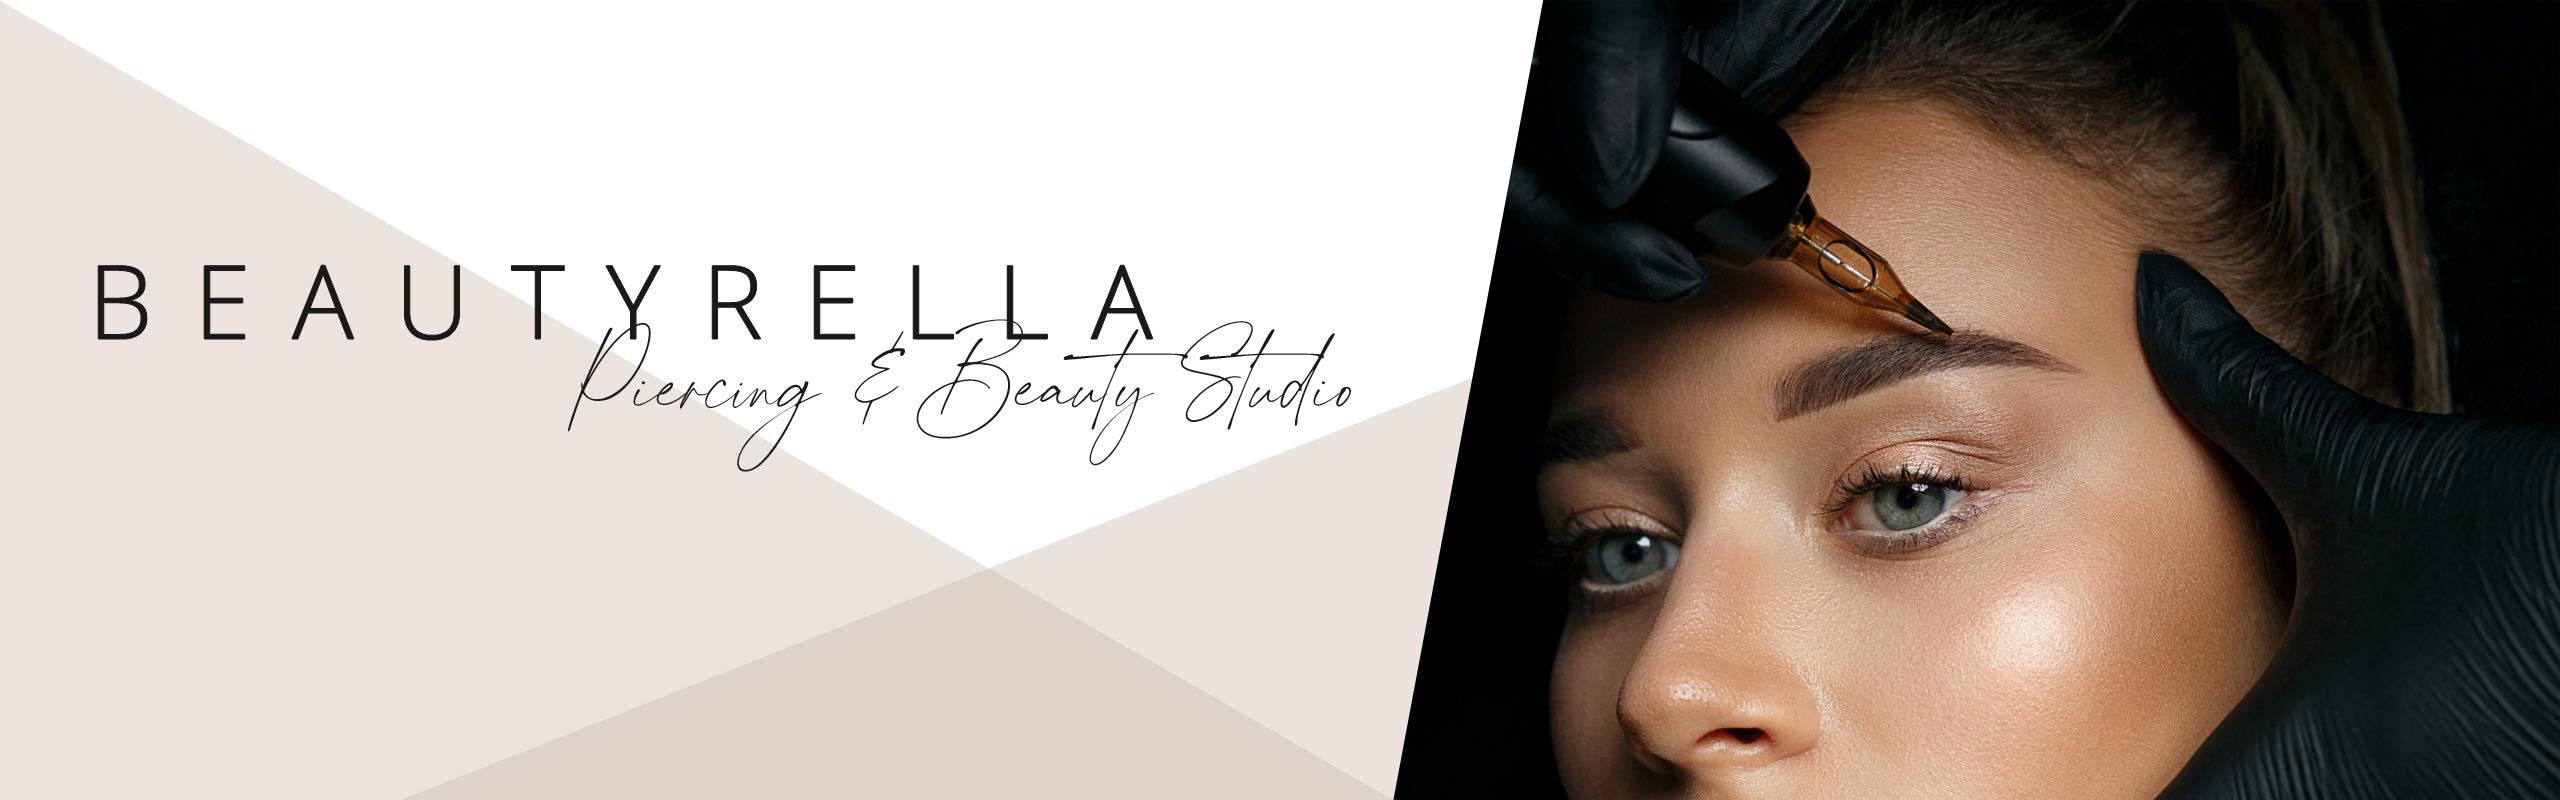 Beautyrella - Piercing & Beauty Studio